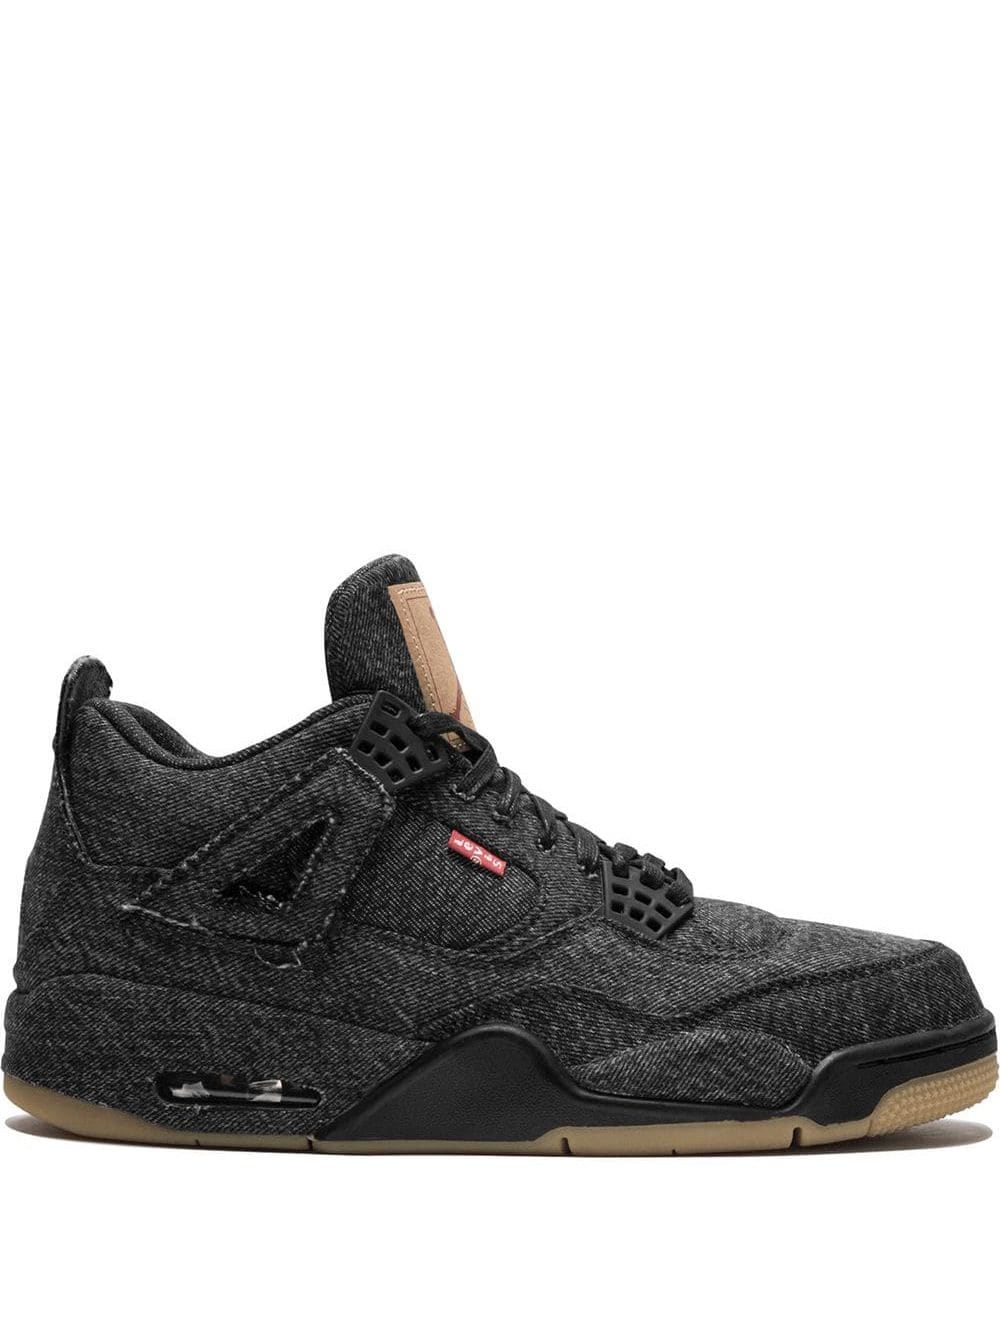 Jordan x Levi's Air Jordan 4 Retro NRG "Black Levis" sneakers